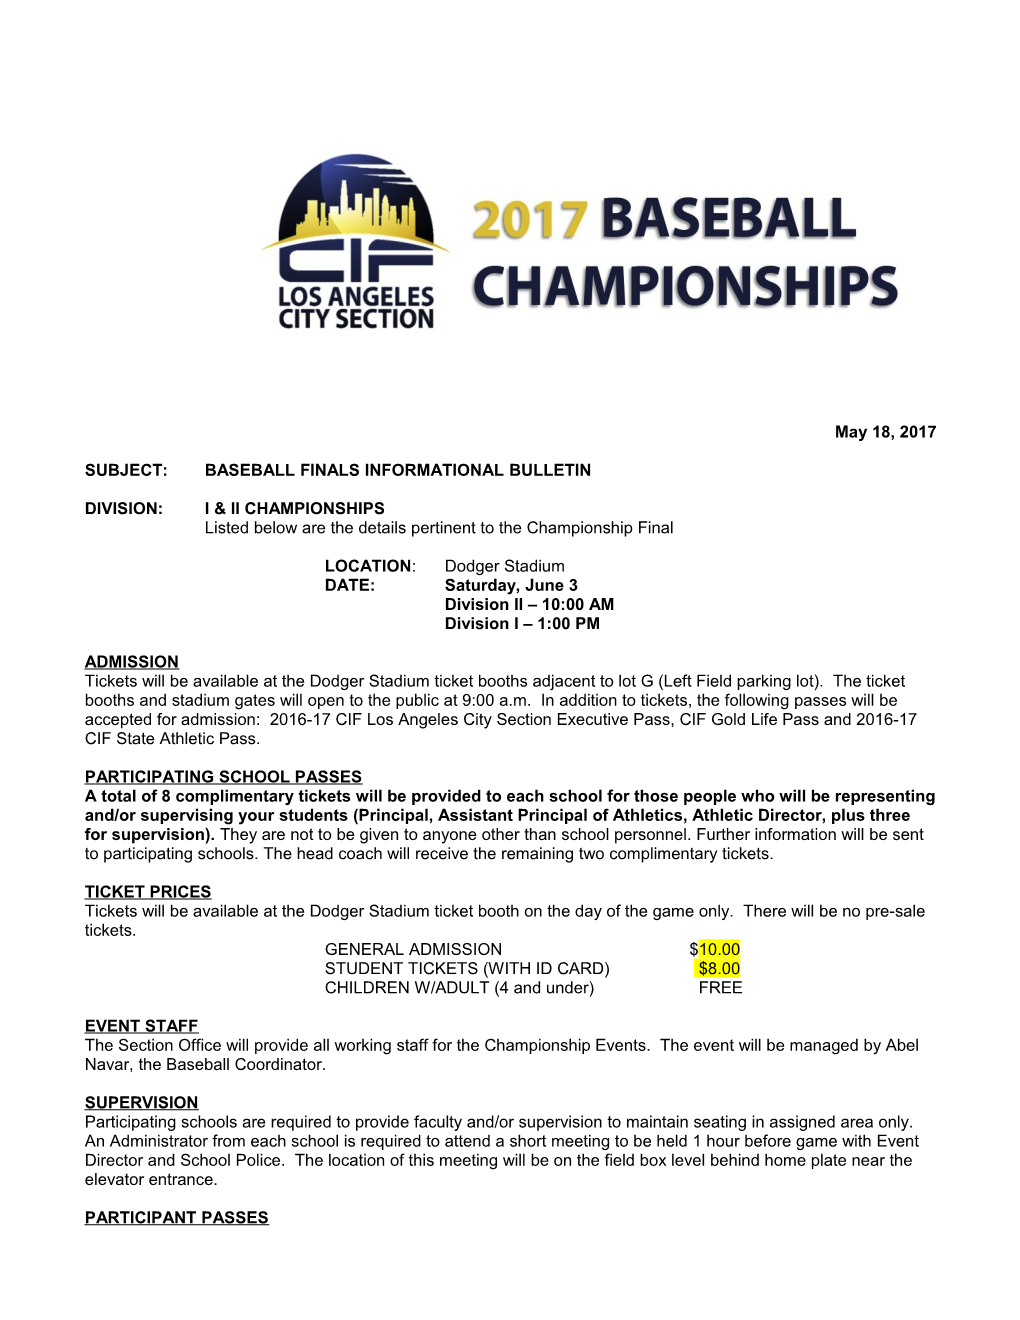 Subject:Baseball Finals Informational Bulletin